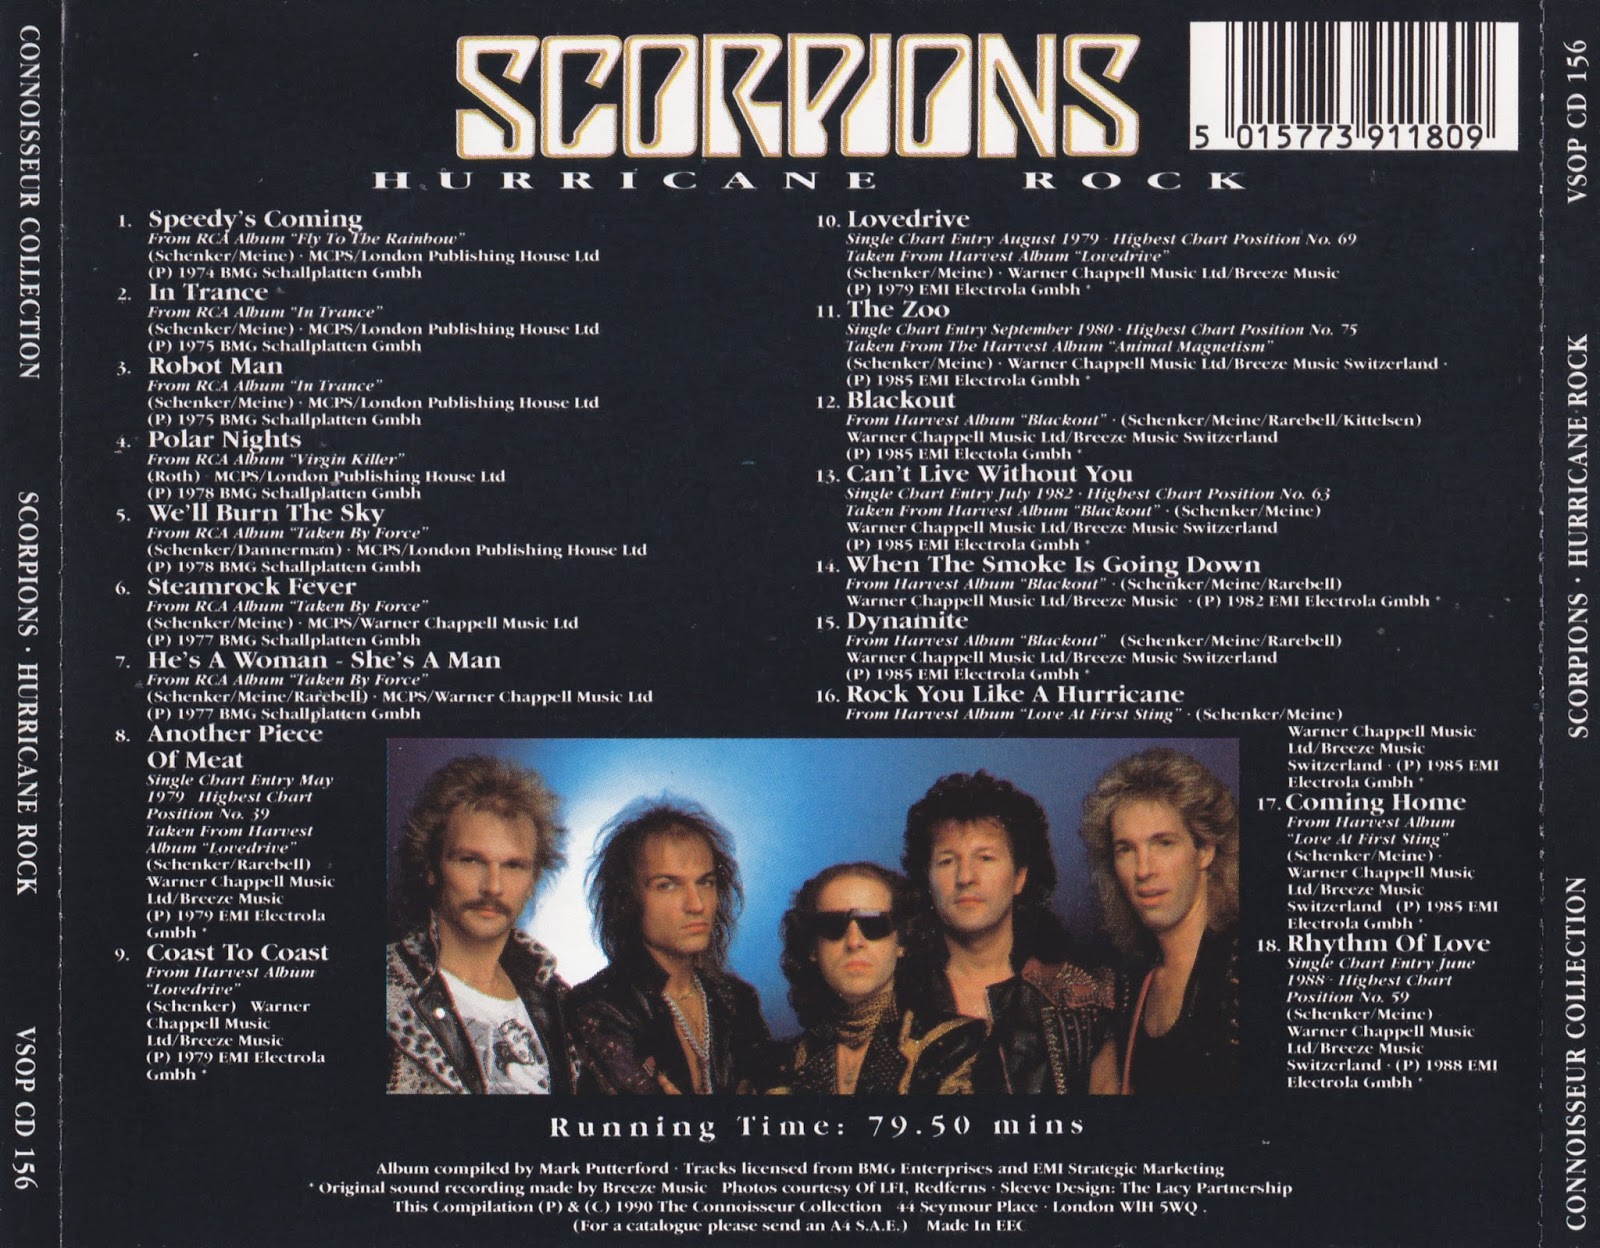 Scorpions like hurricane. Scorpions 1977 CD. Scorpions 1988 альбом. Scorpions 1970 обложки. Скорпионс Харрикейн.